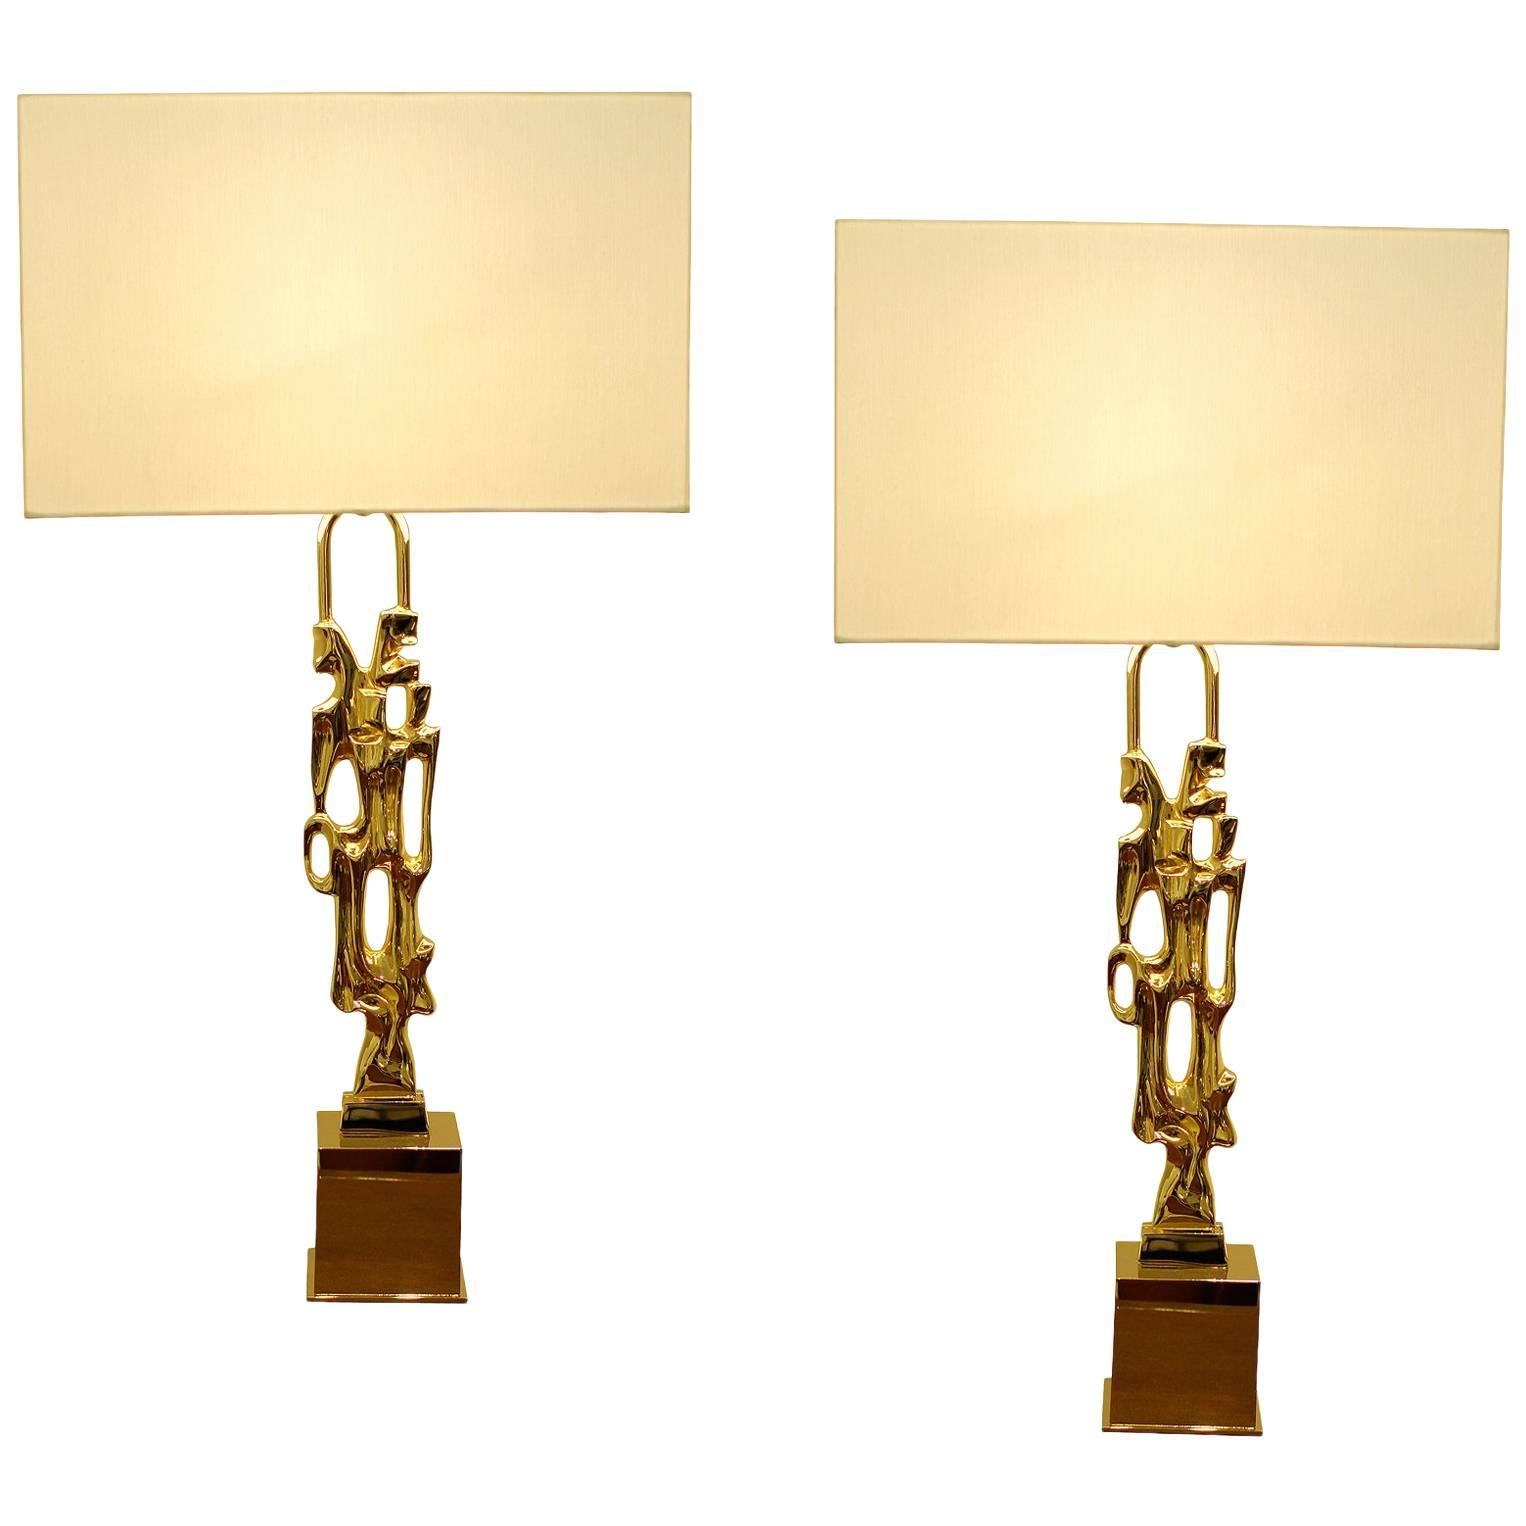 Ph. Glapineau, Pair of Gilt Bronze Table Lamps